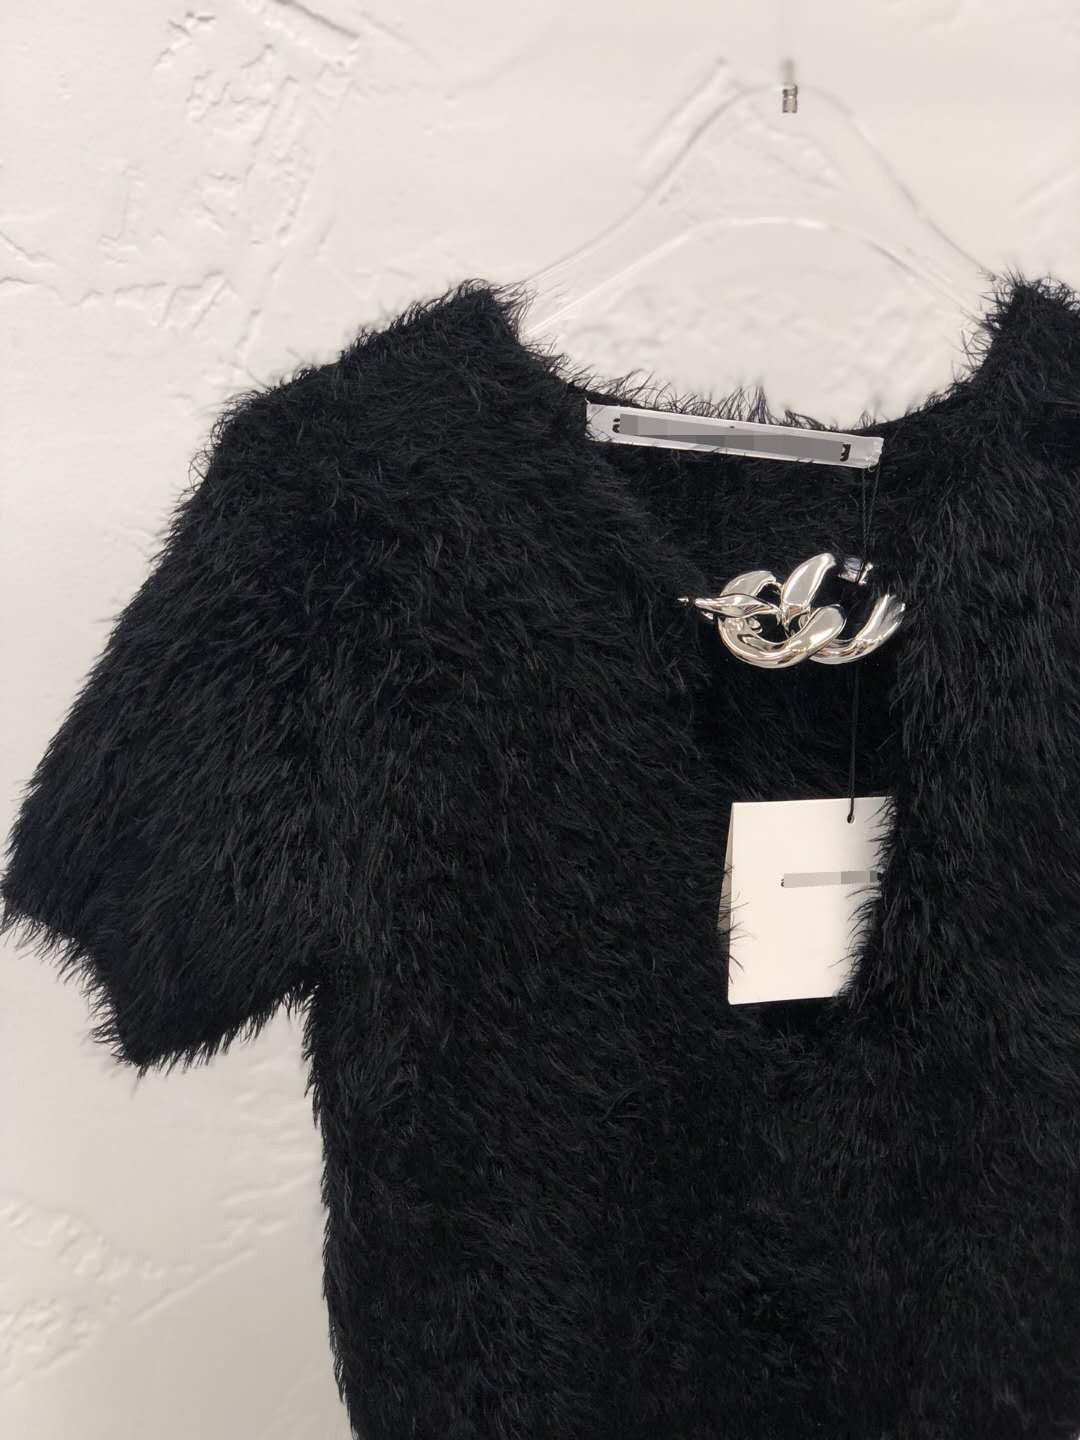 Blackpink Lisa Inspired Wool V-Neck Metal Chain Short Sleeve